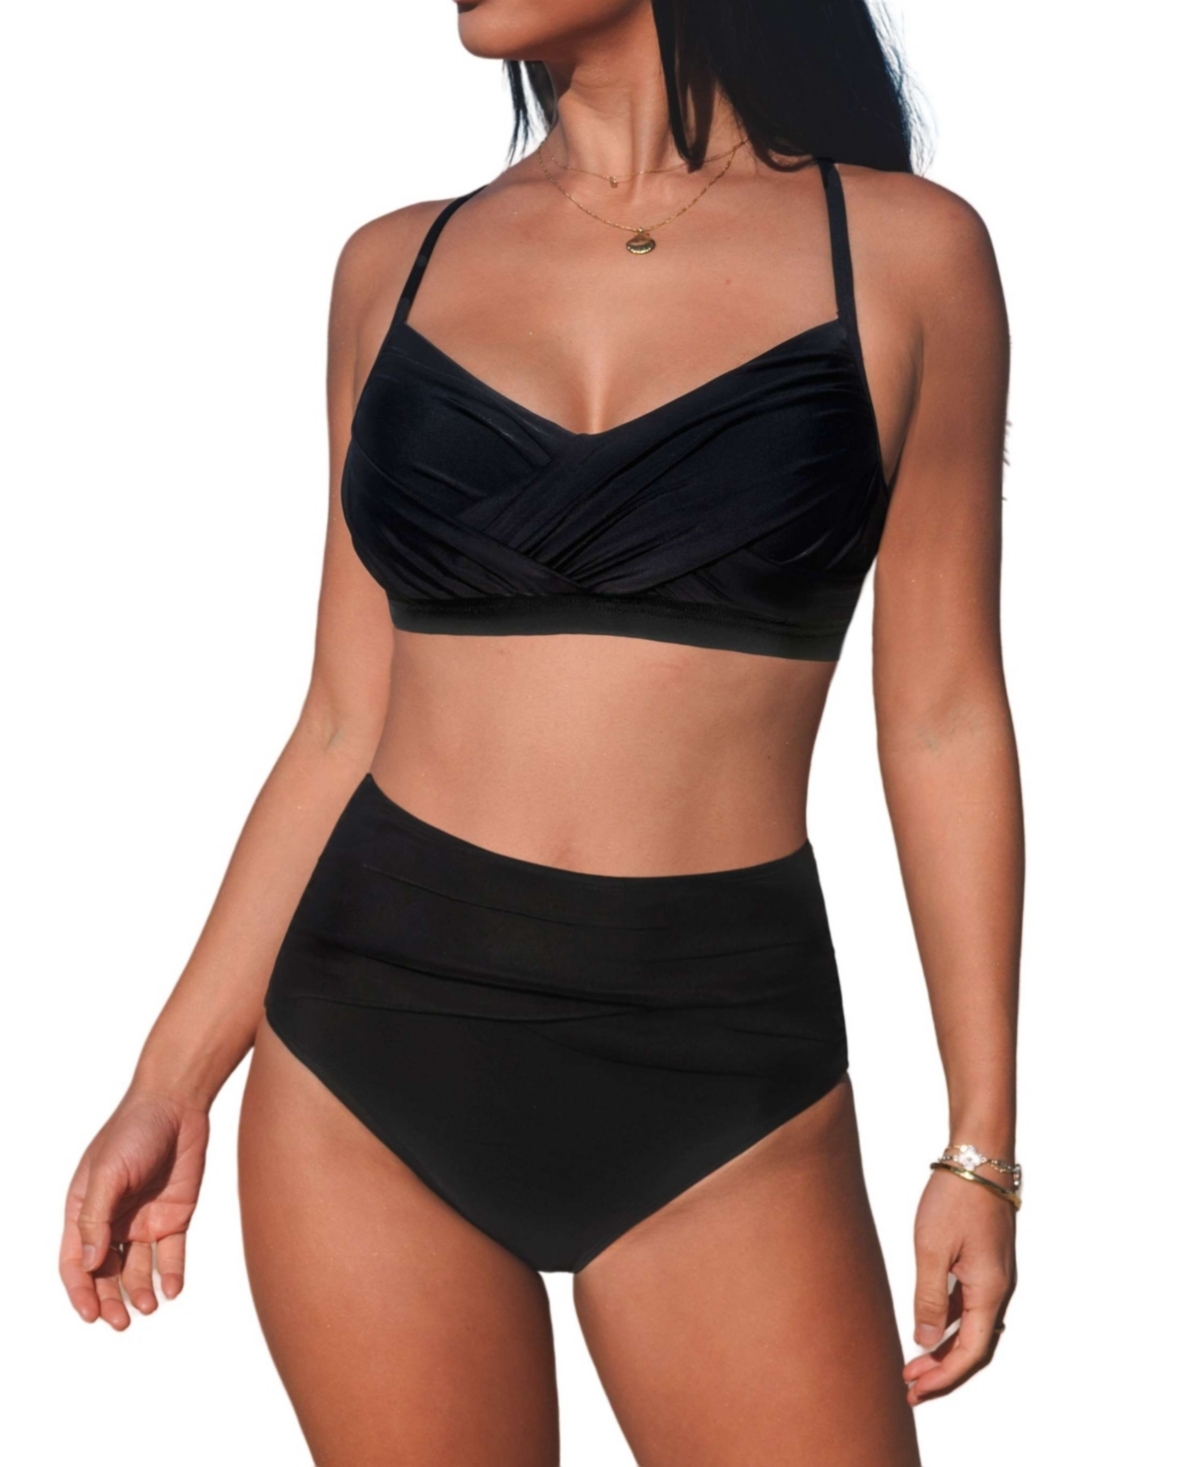 Women's Onyx Lace-Up Bikini Top & Ruched Bottoms Set - Black